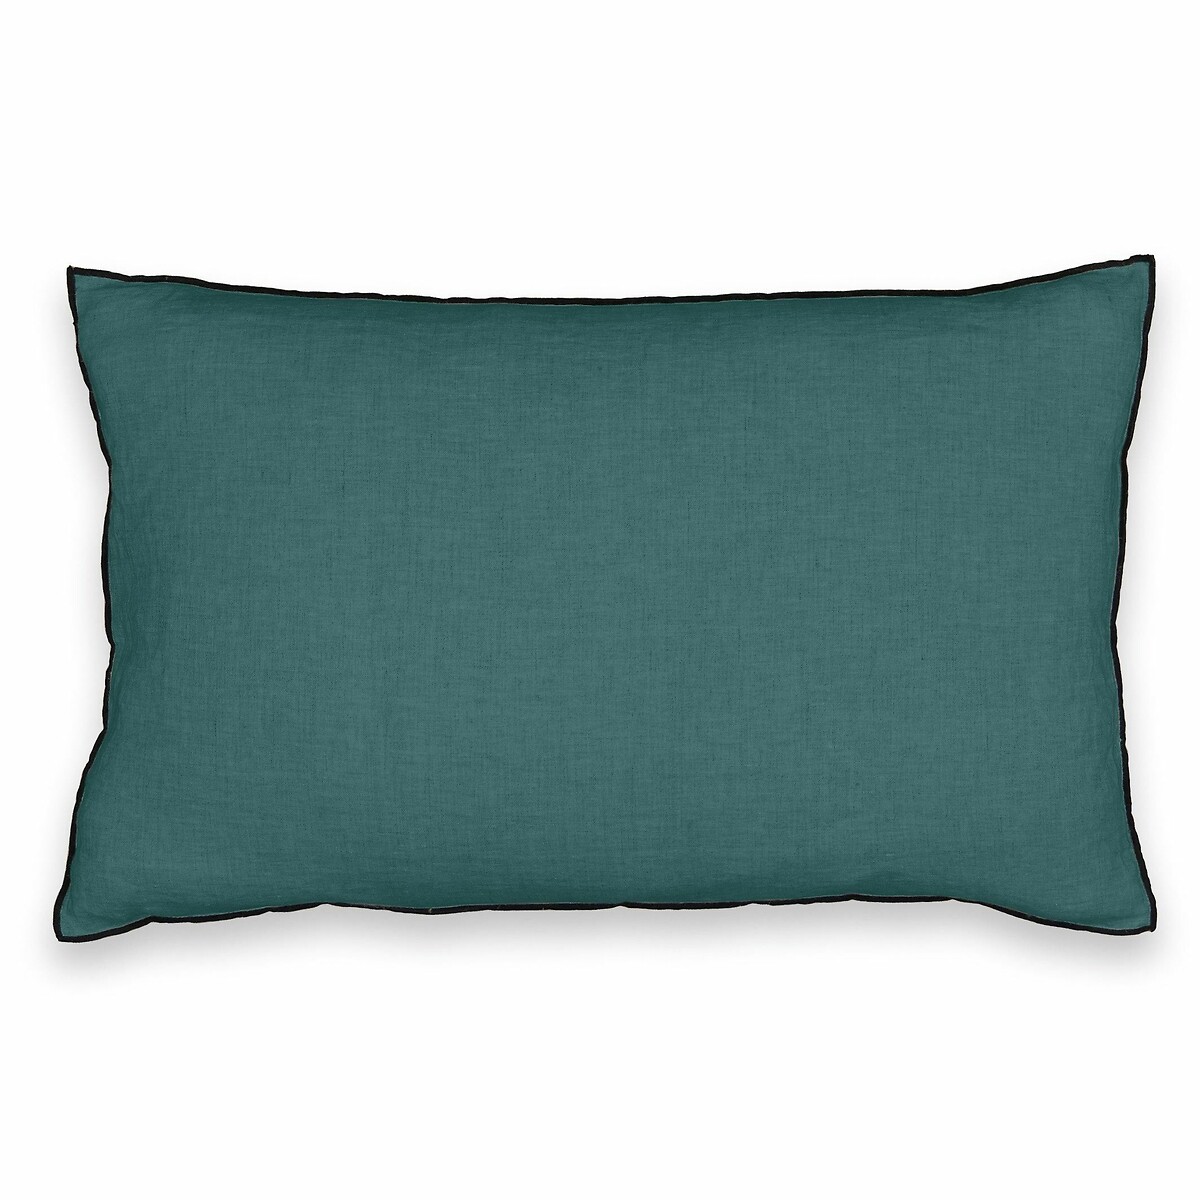 Чехол LaRedoute На подушку 100 стираный лен ELina 60 x 40 см зеленый, размер 60 x 40 см - фото 3